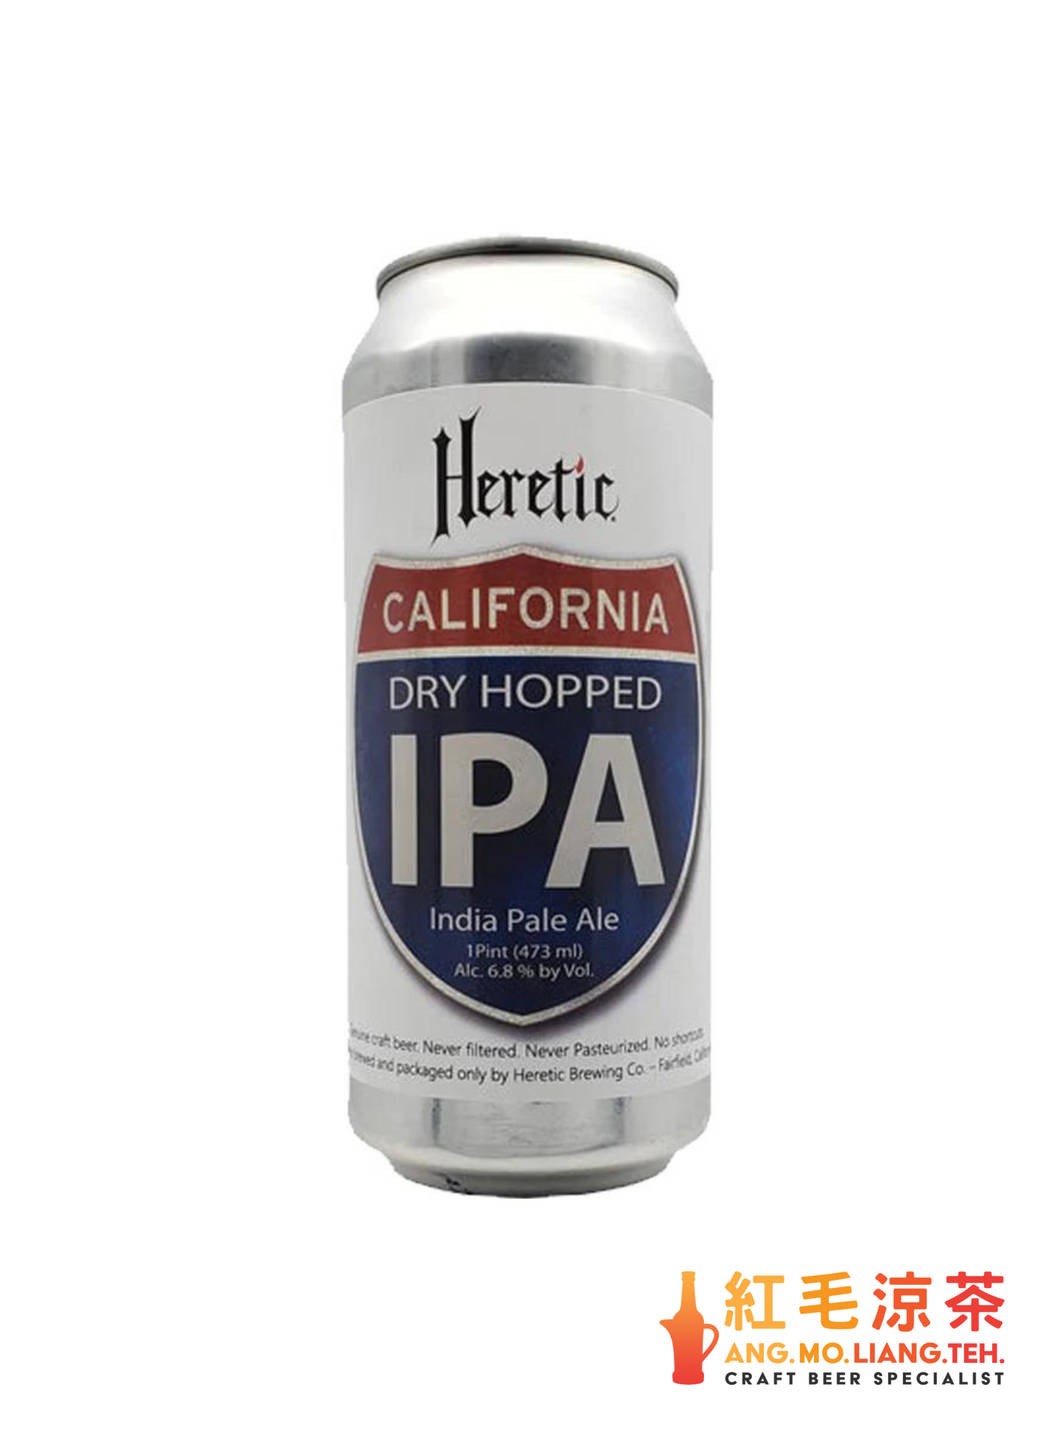 Ang Mo Liang Teh: Heretic California Dry Hopped IPA, 6.8% (473ml)